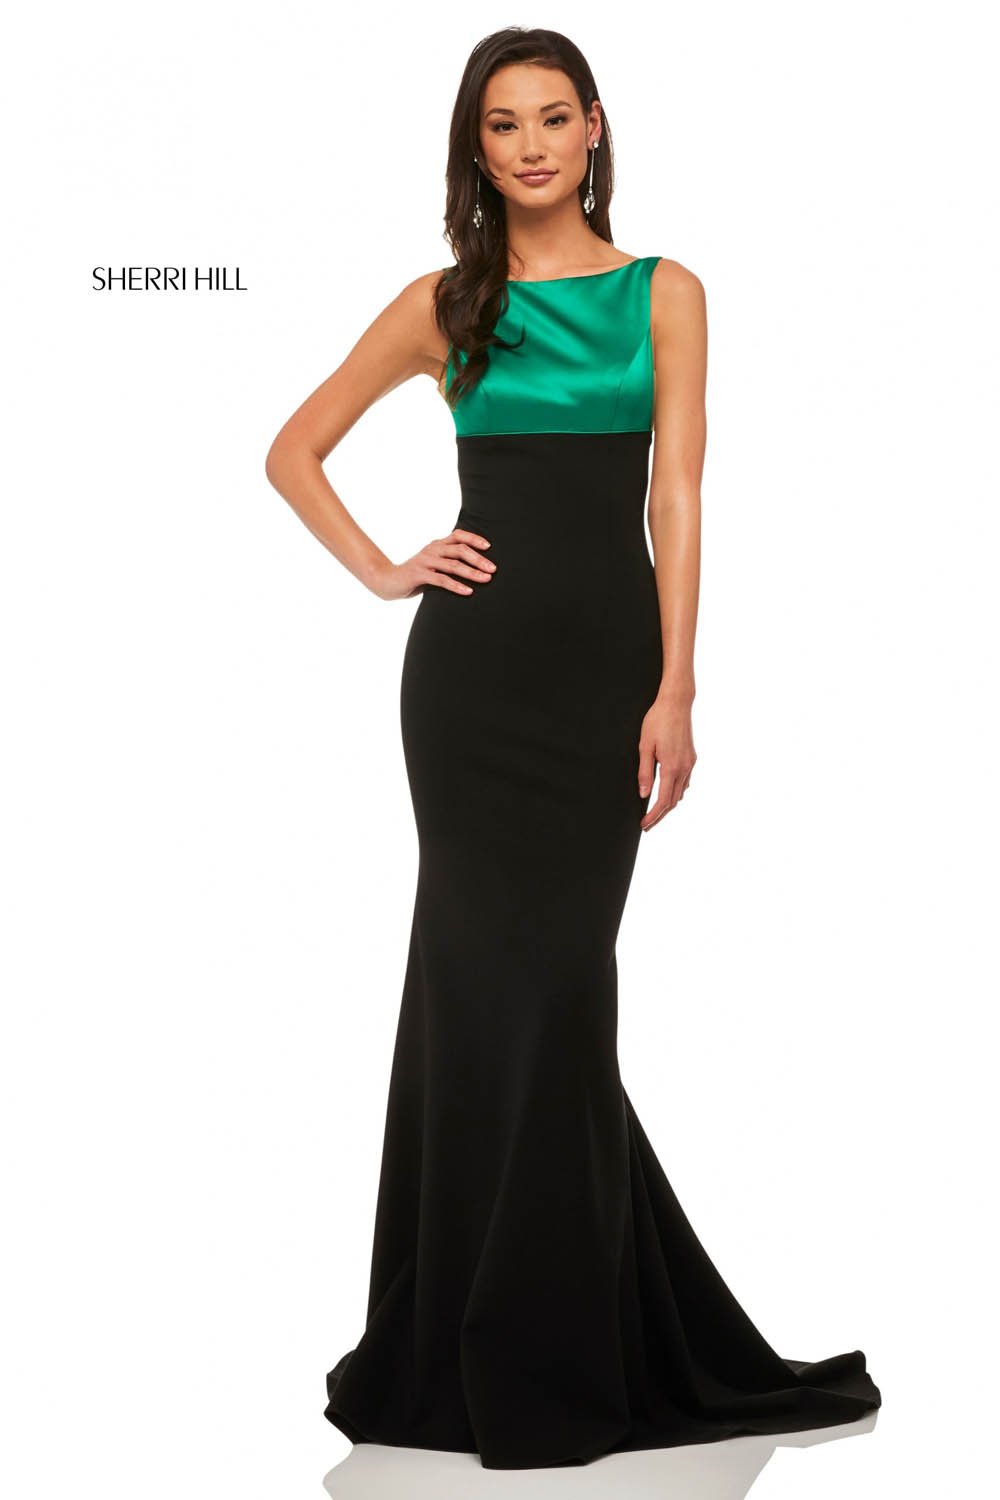 Sherri Hill 52903 dress images in these colors: Emerald Black, Blush Navy, Black Ivory, Red Black, Ivory Black.